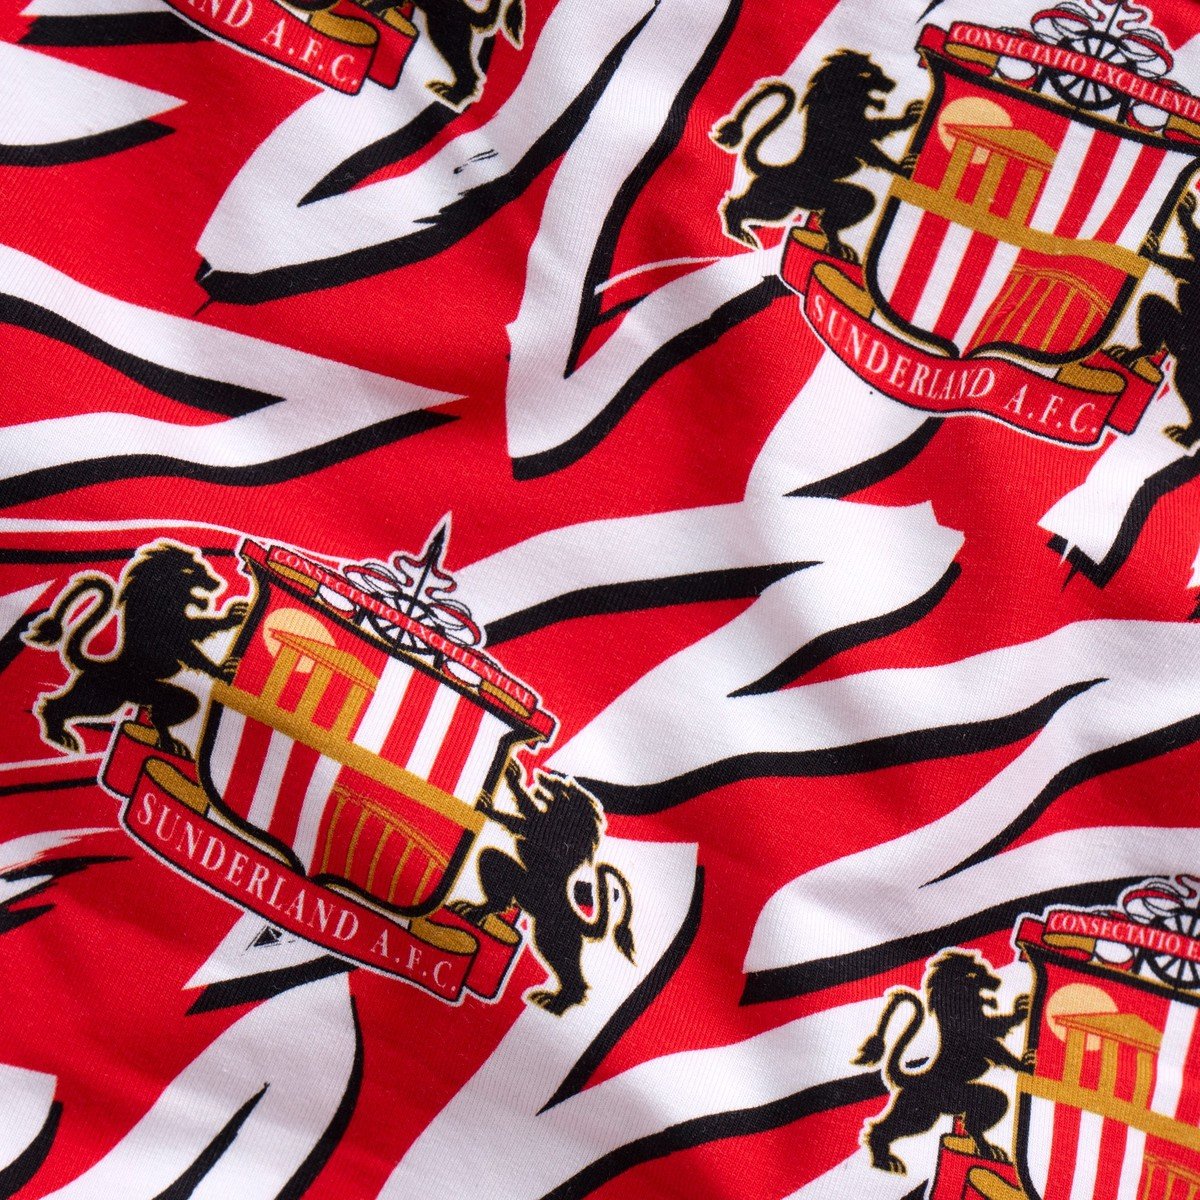 Buy the OddBalls Zebra Ladies Briefs online at Sunderland AFC Store